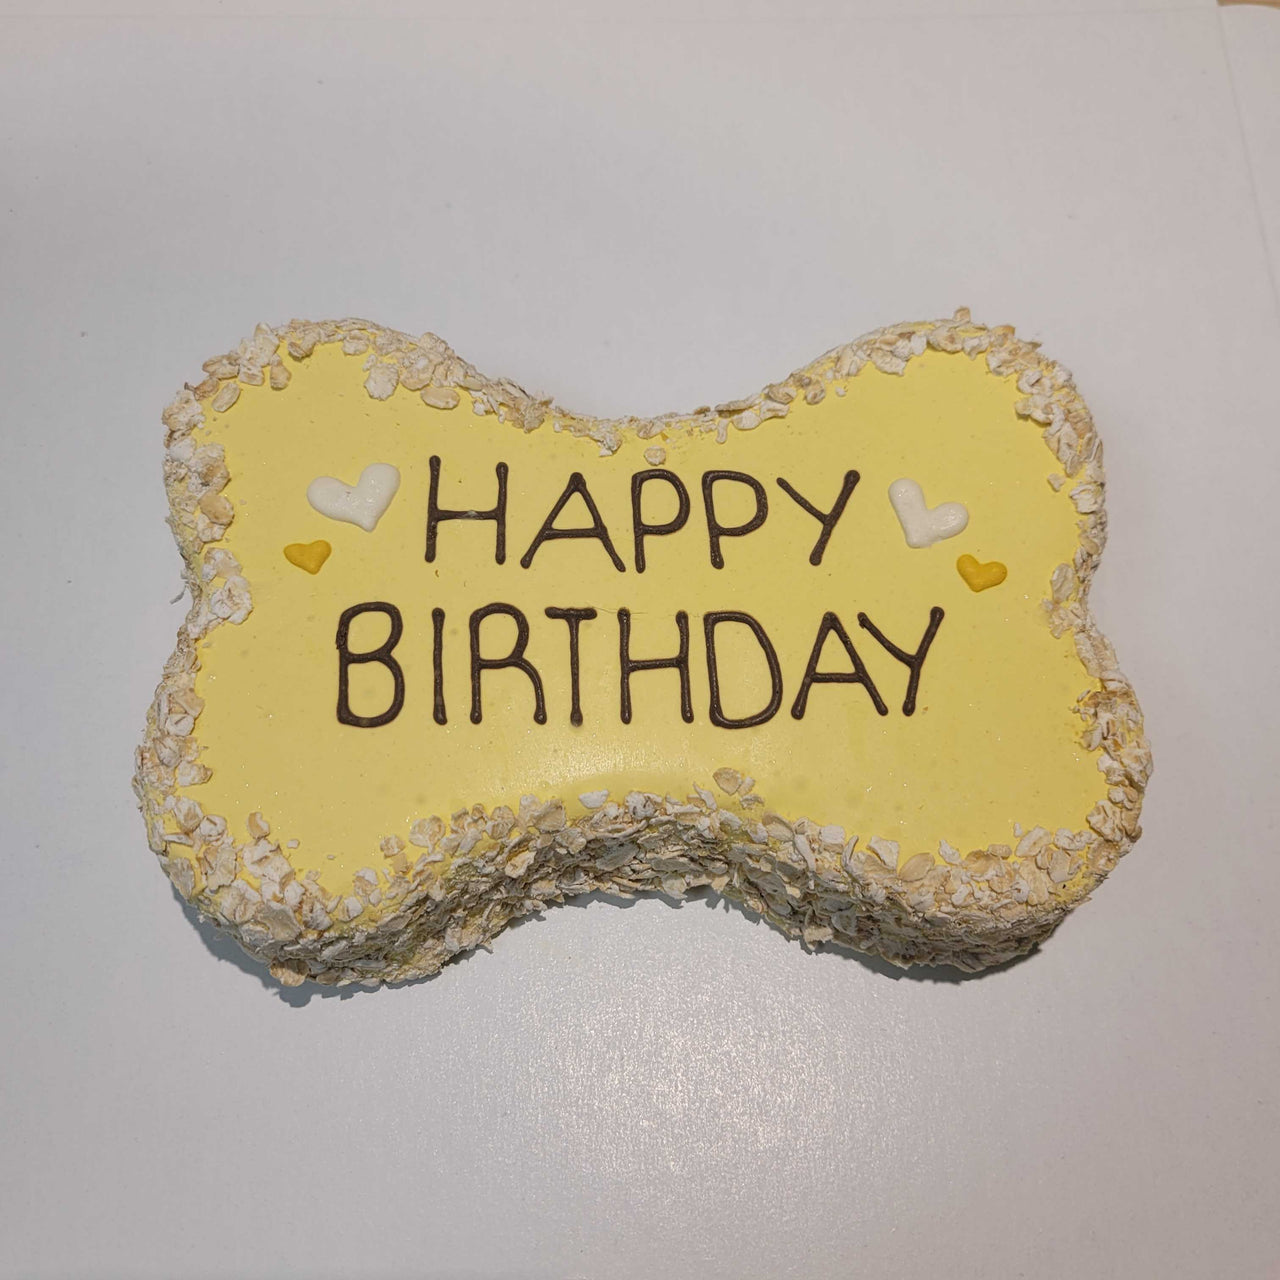 6" Bone Shaped Doggy Birthday Cake